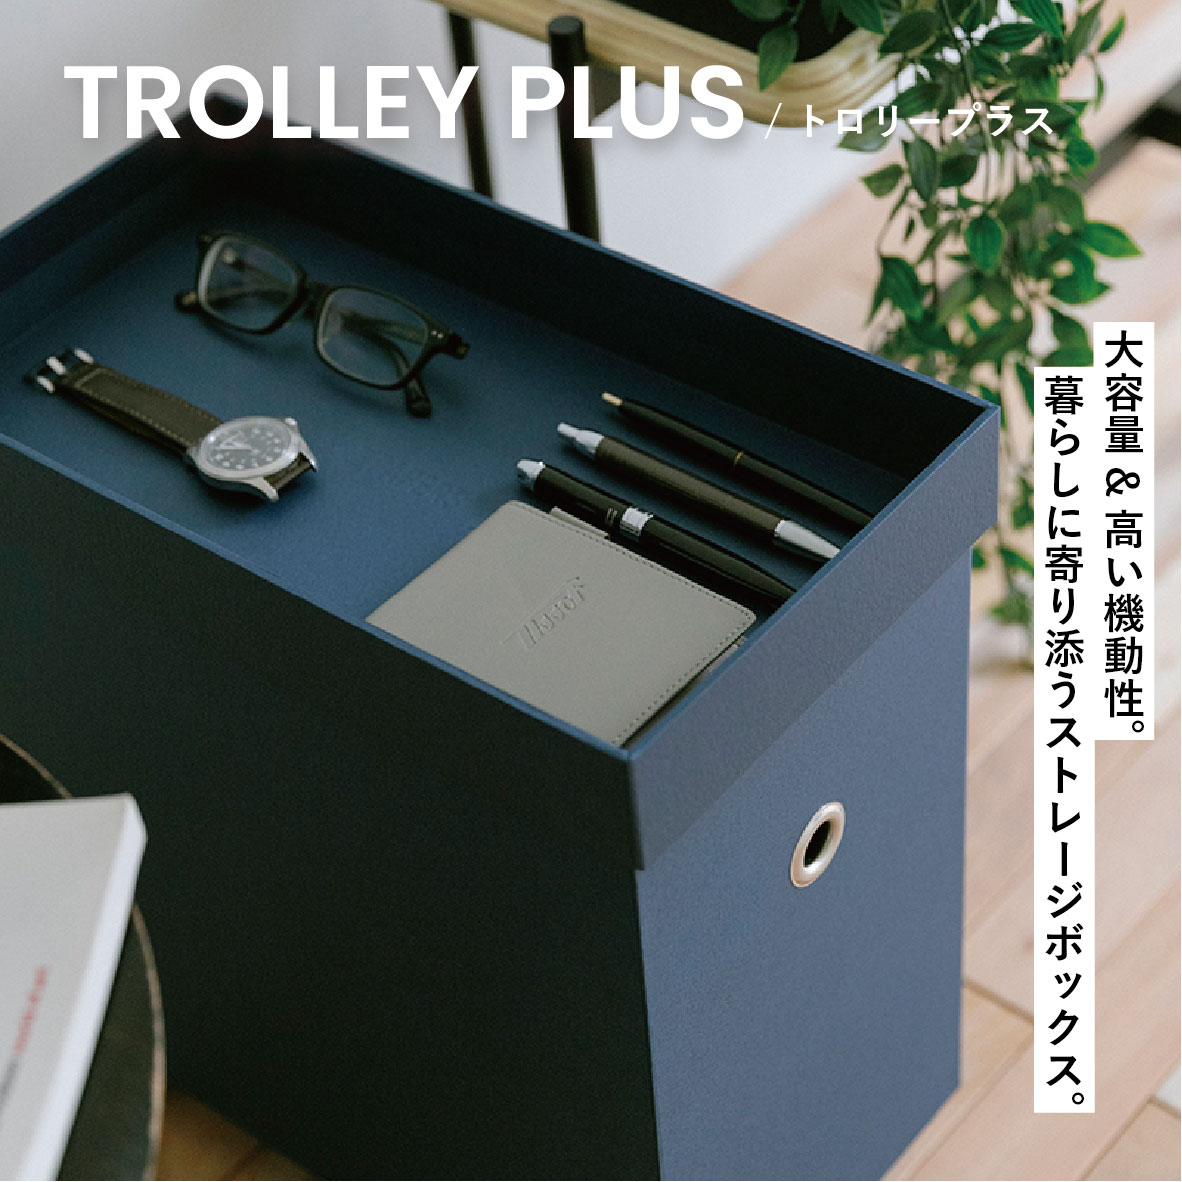 TROLLEY PLUS/受注生産画像